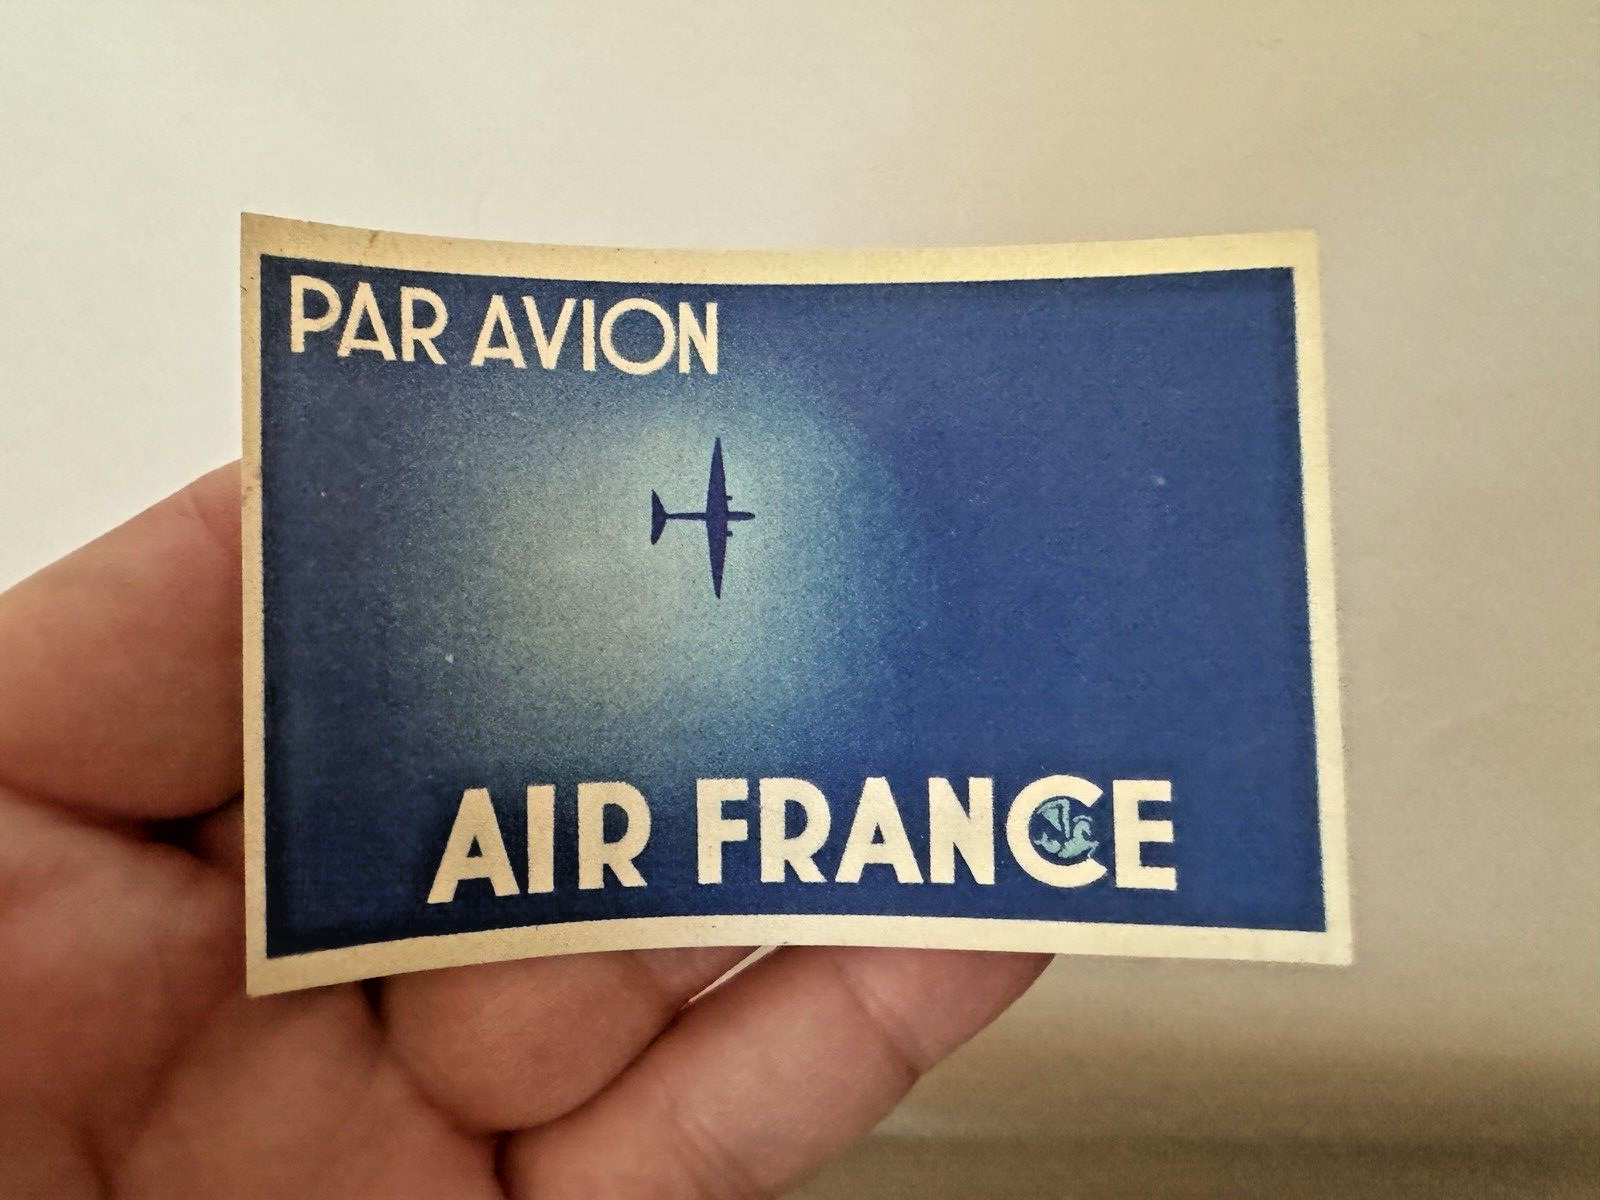 Vintage Par Avion Air France Airline Plane Travel Decal Sticker for Luggage